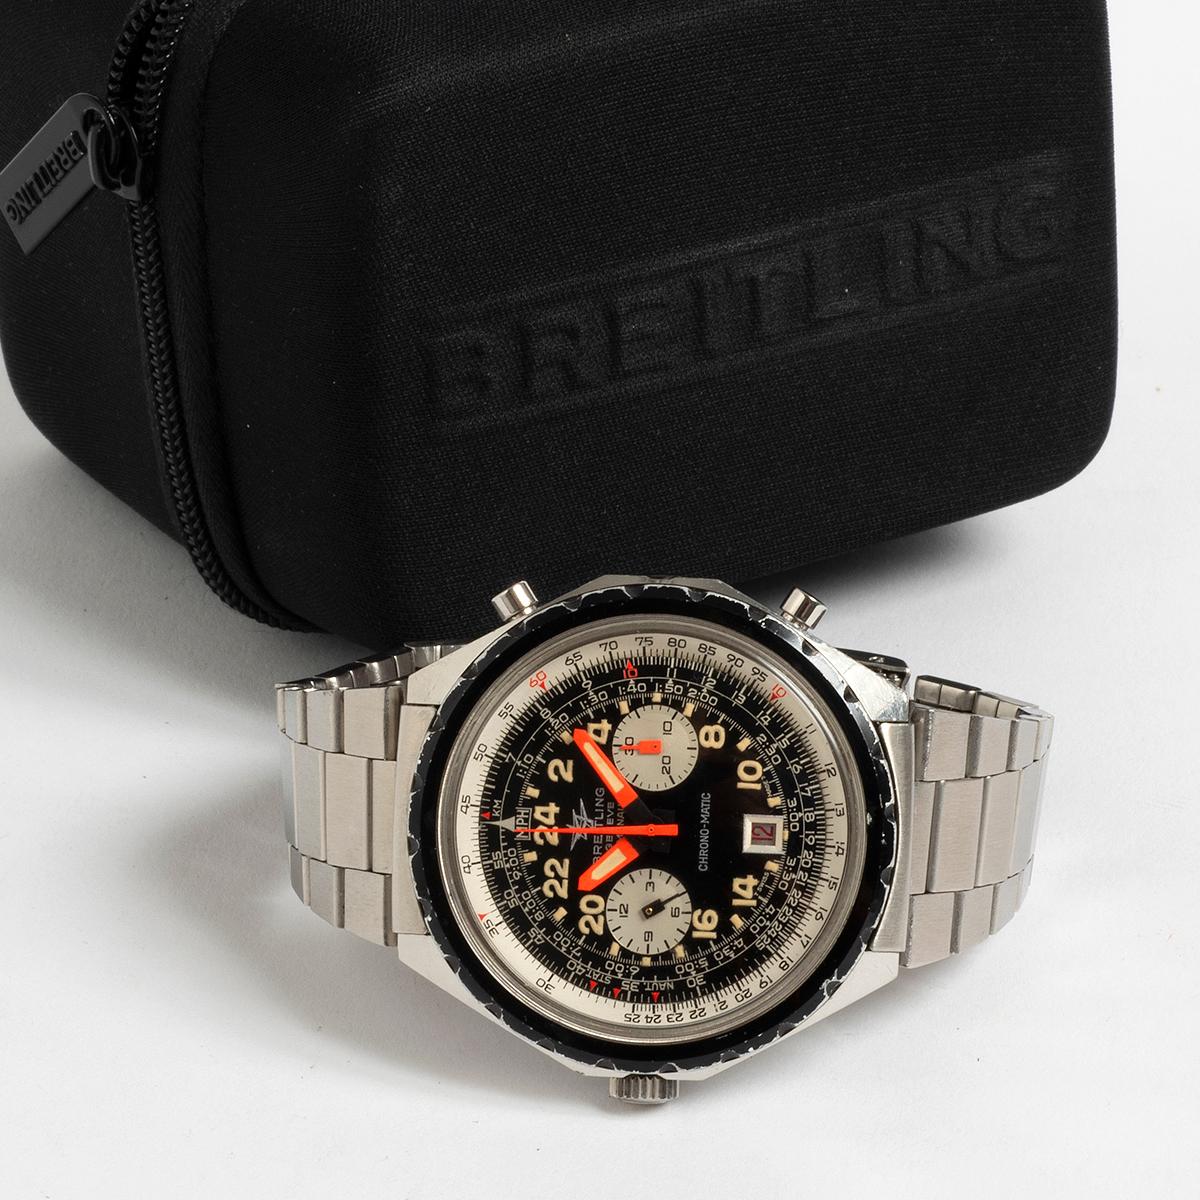 Breitling Cosmonaute Chrono-matic Armbanduhr 1809, Call 11, 48 mm Gehäuse. ca. 1970. im Angebot 1